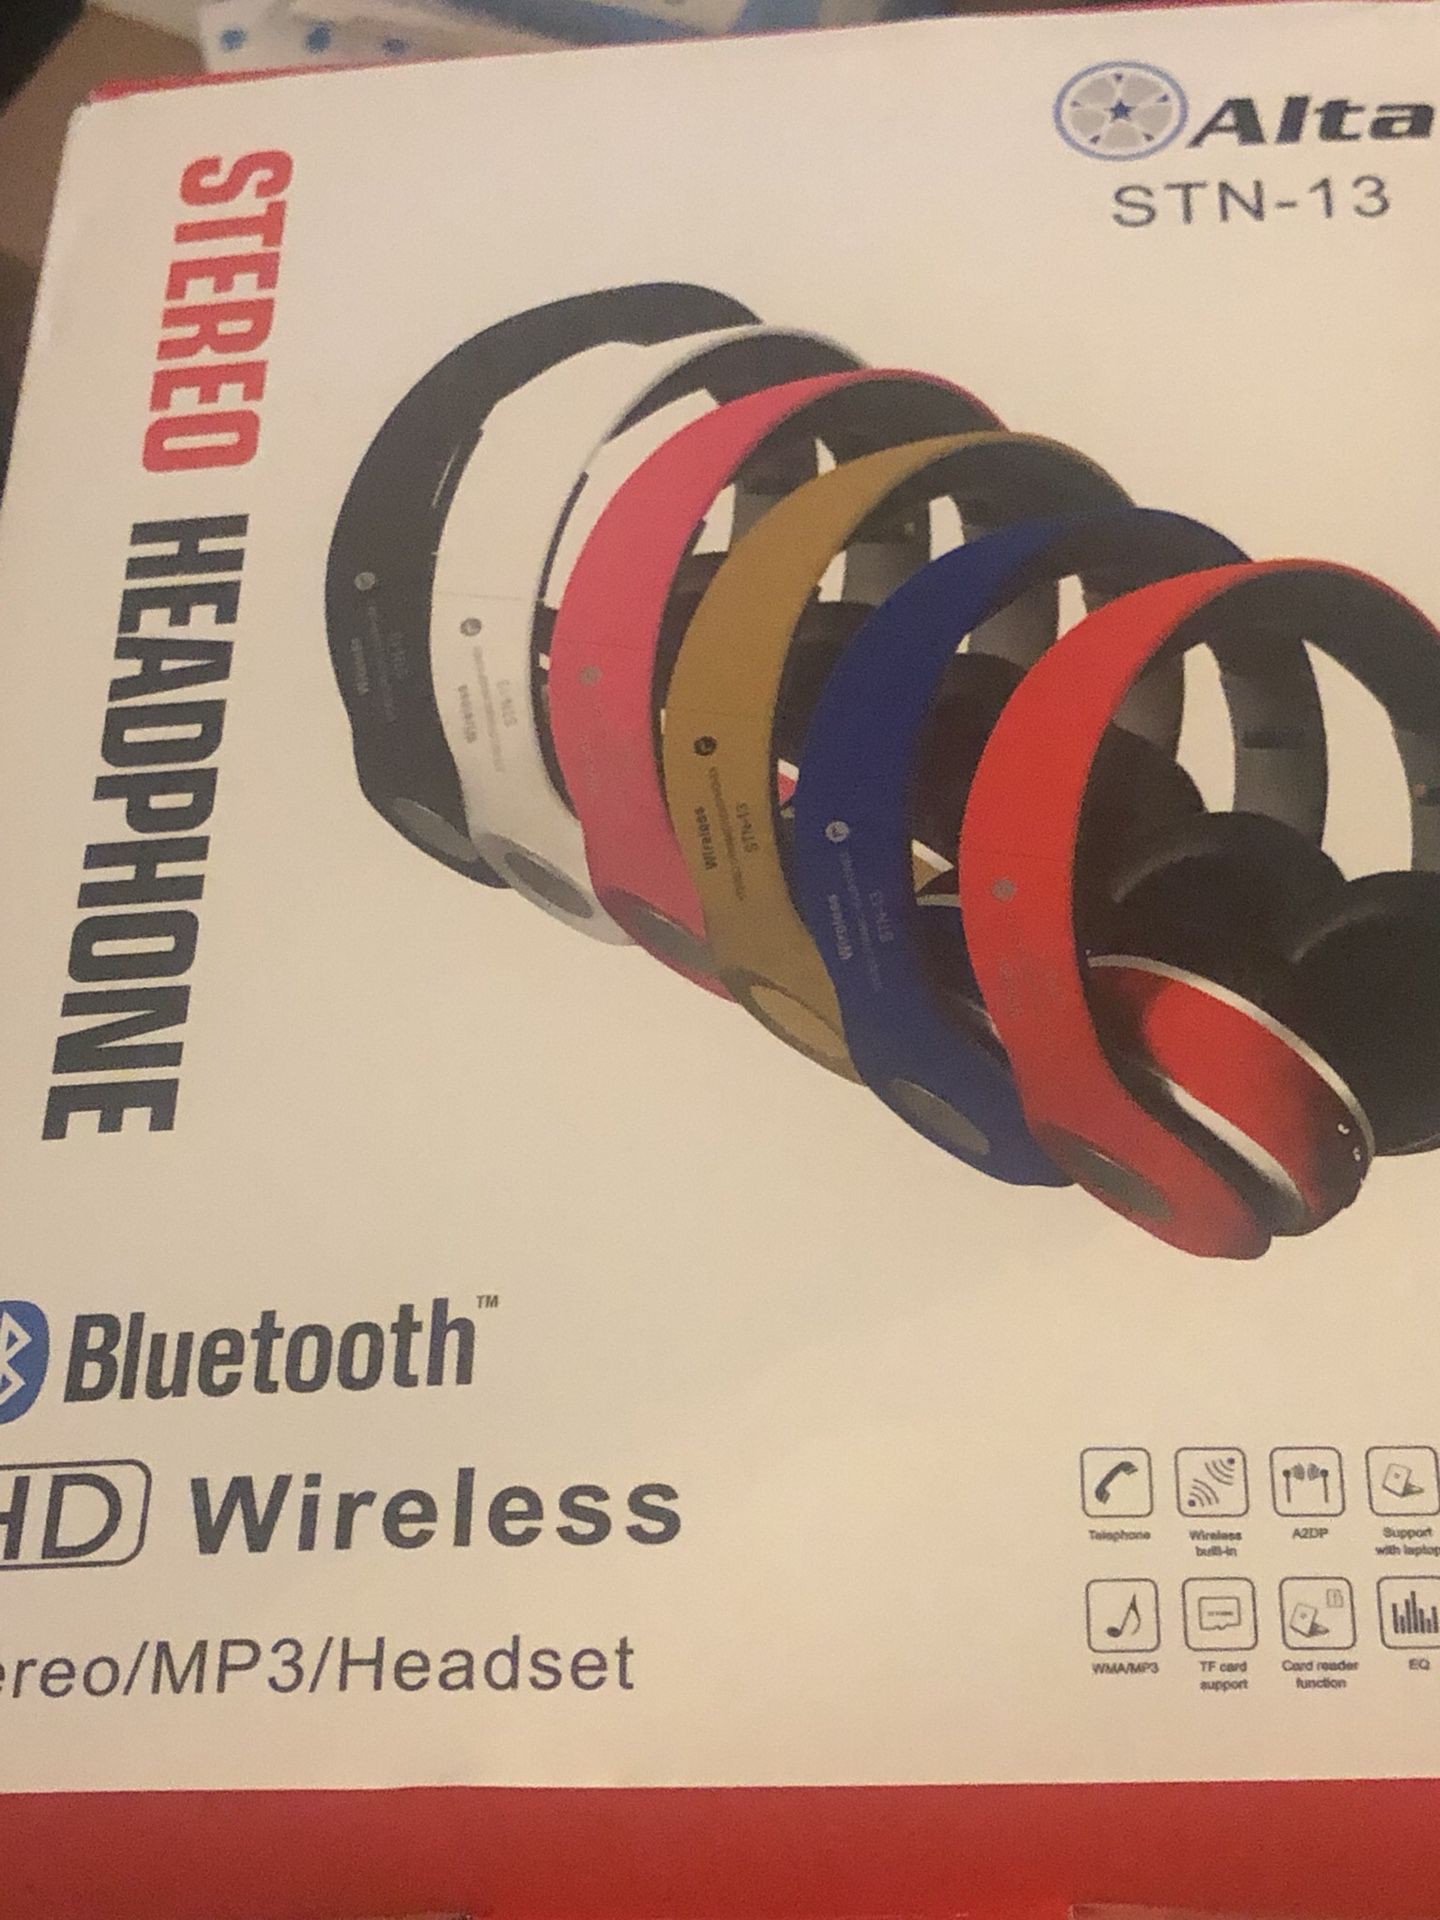 New brand stereo Bluetooth wireless hHd mp3 headset